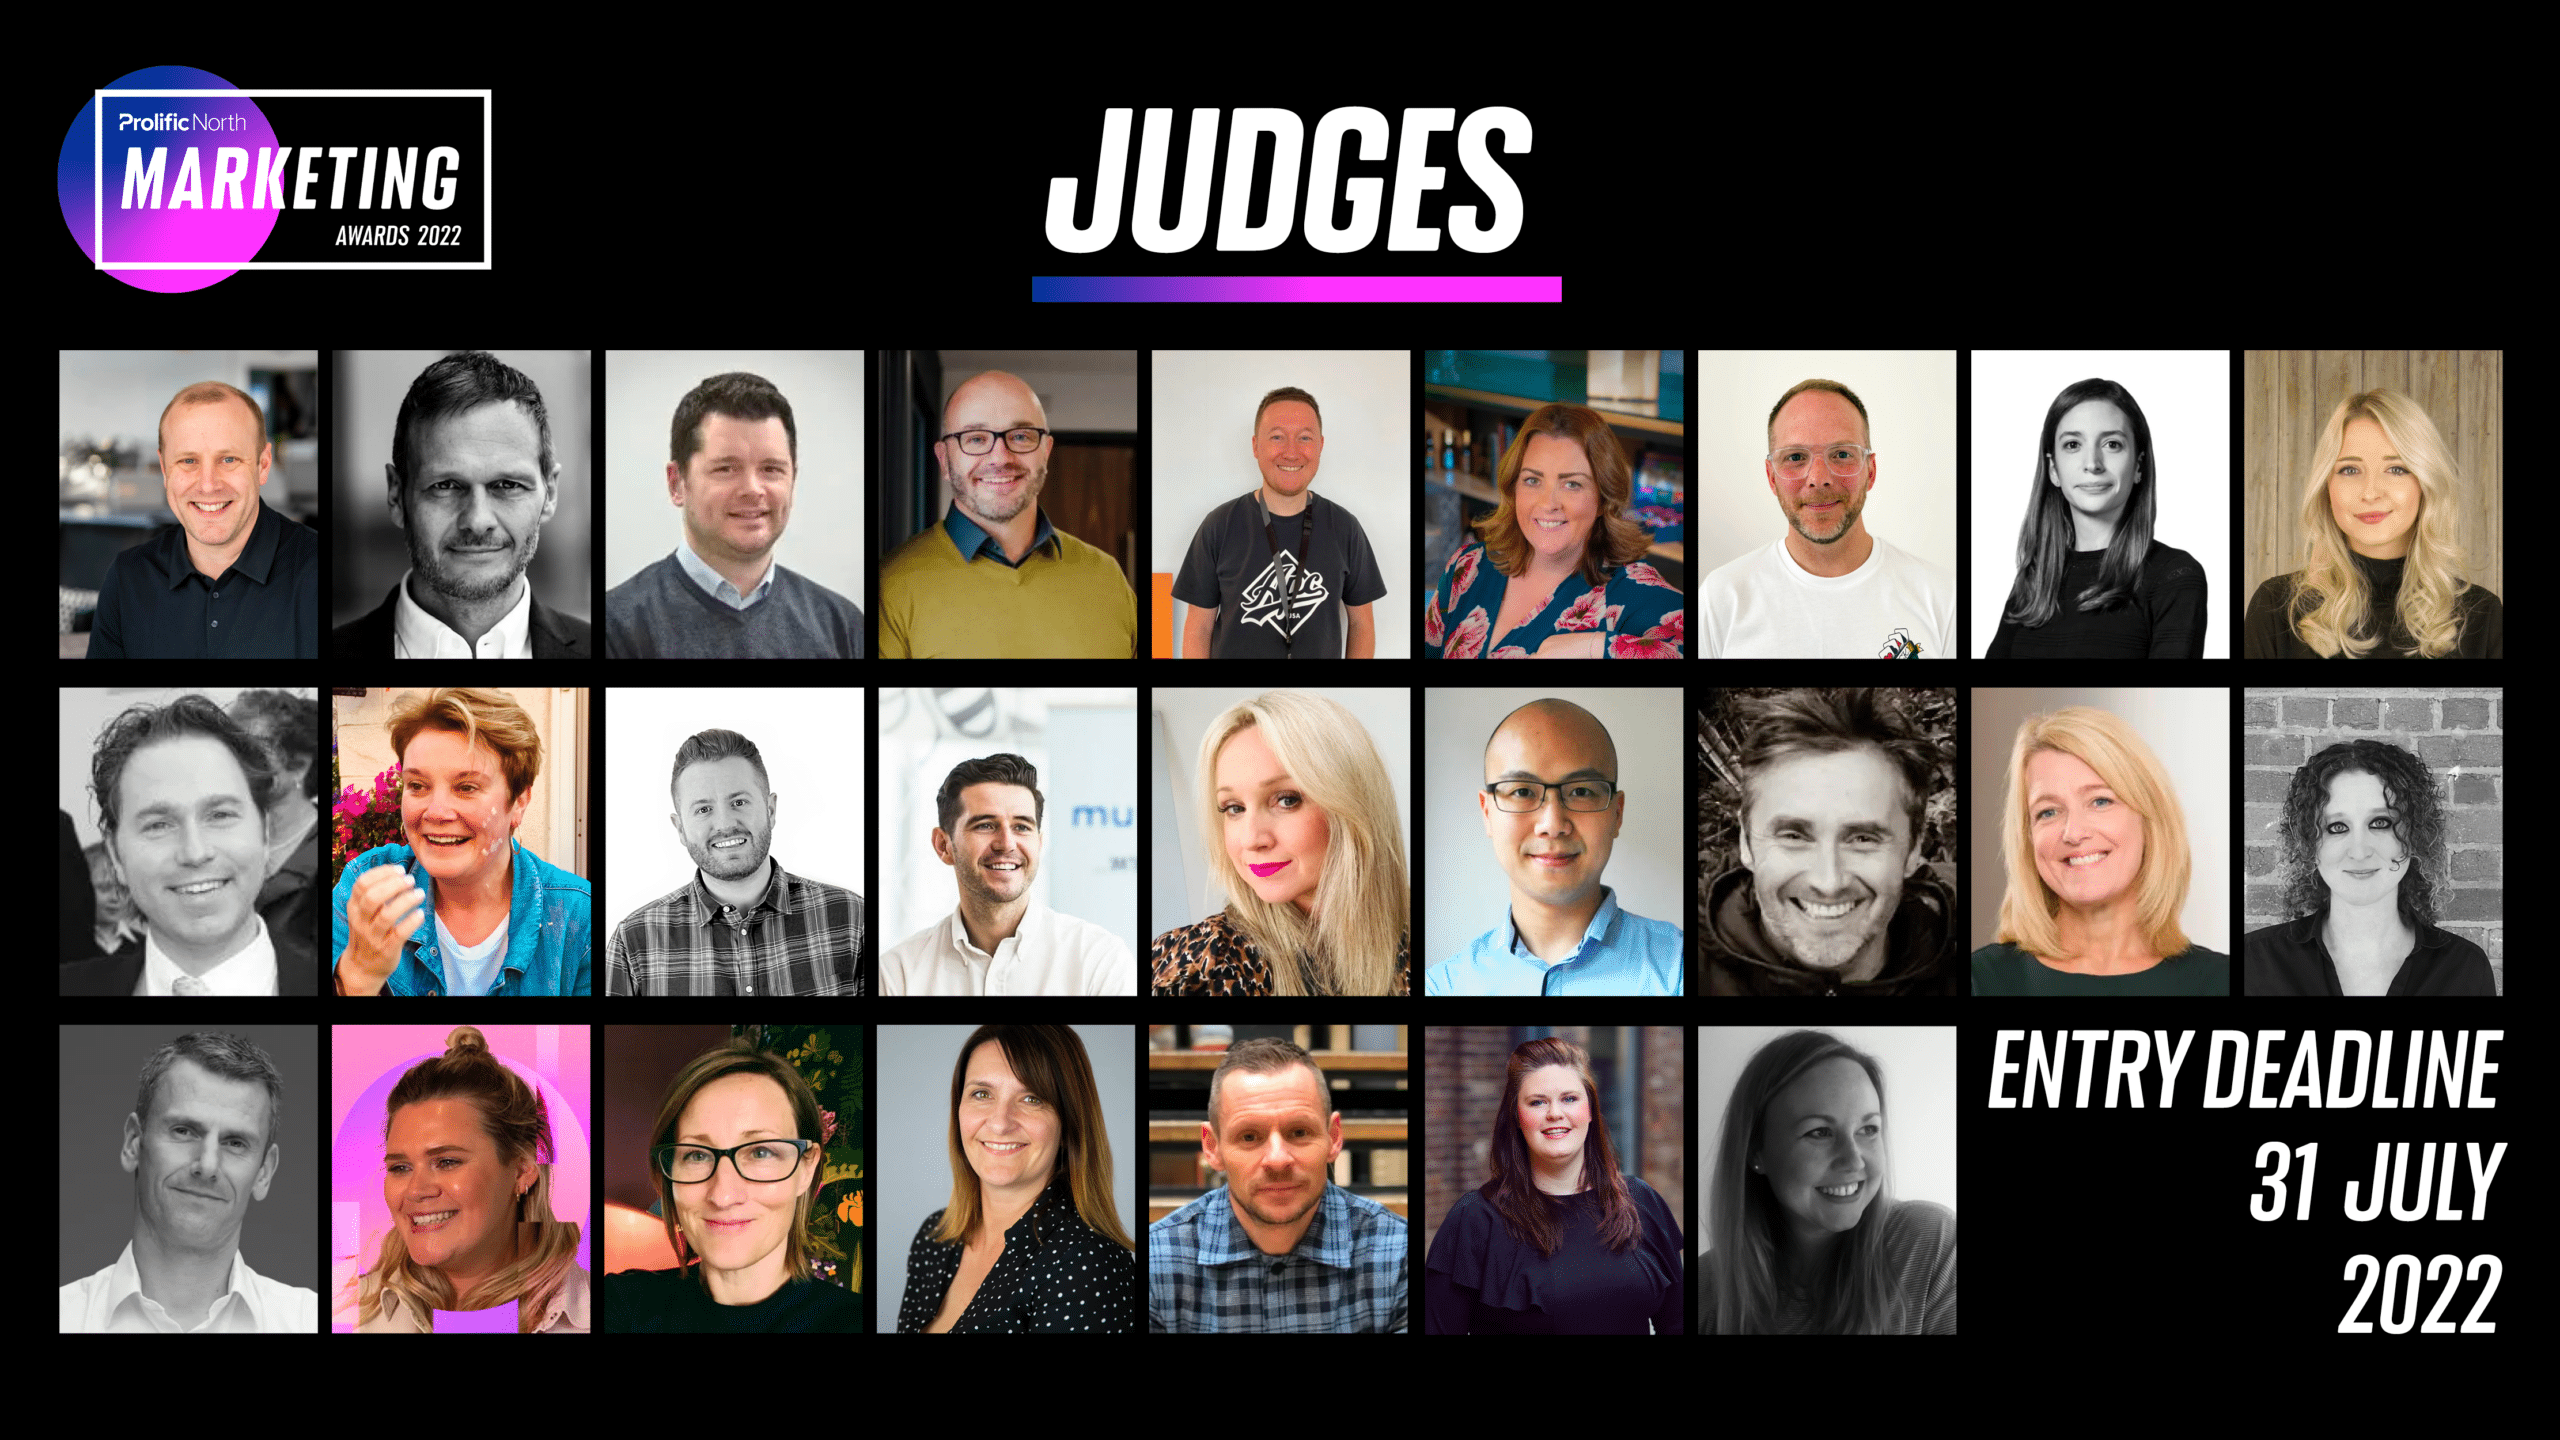 Prolific North Marketing Awards 2022 full list of judges